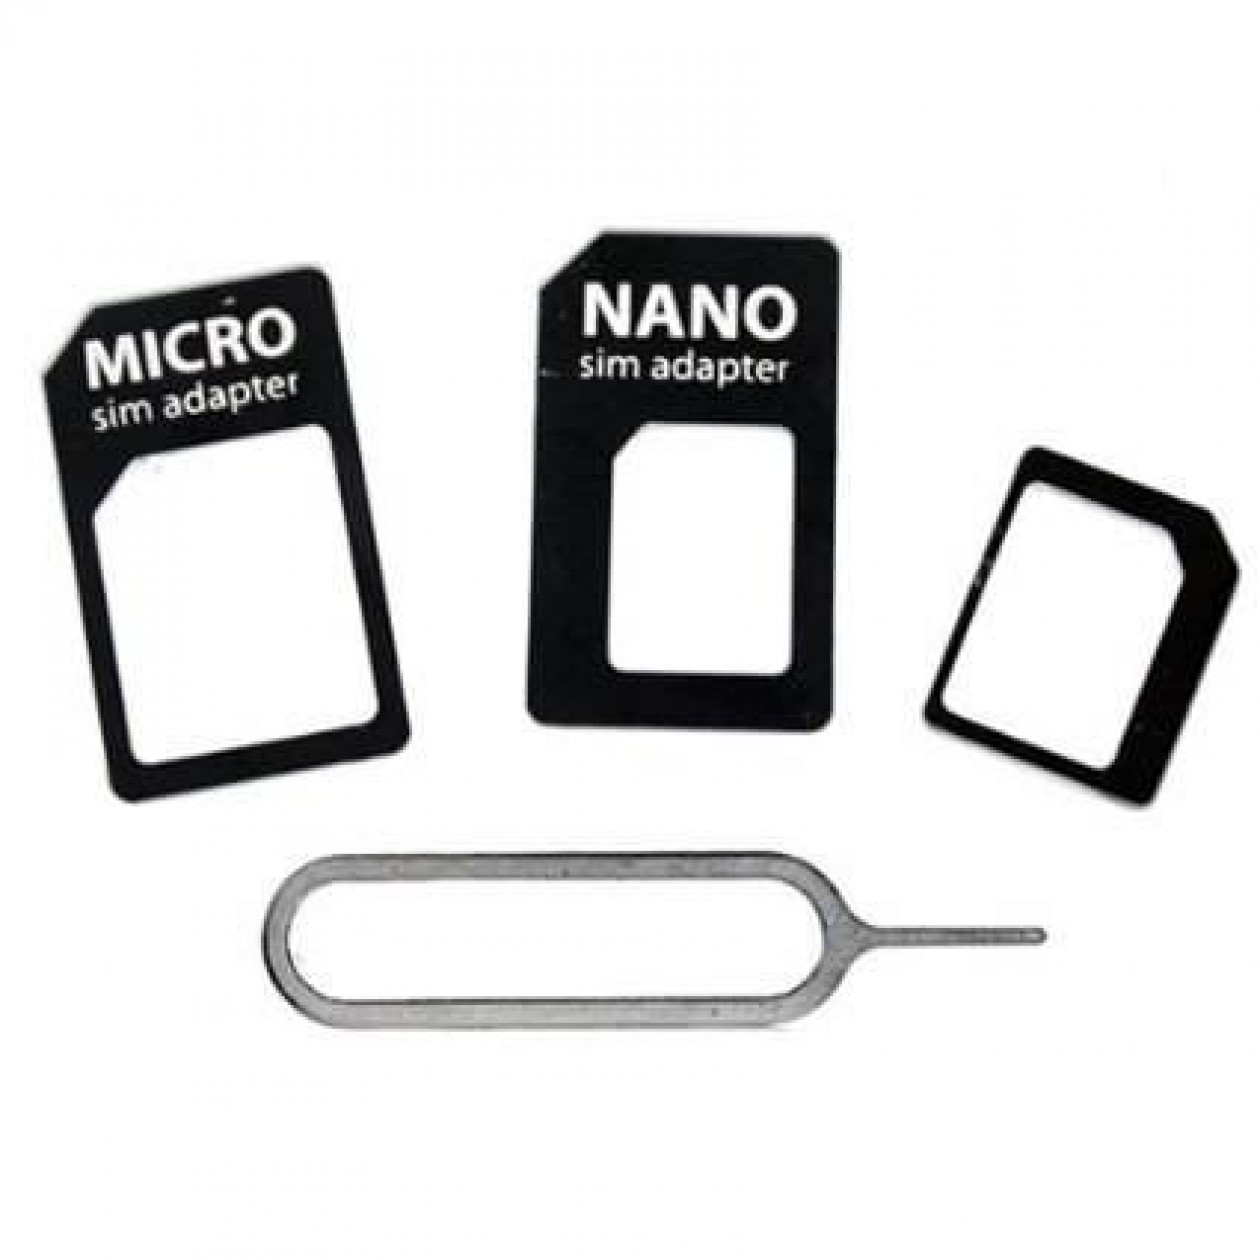 Rheme 4 in 1 Nano SIM Card Adapter Converter to Micro & Standard